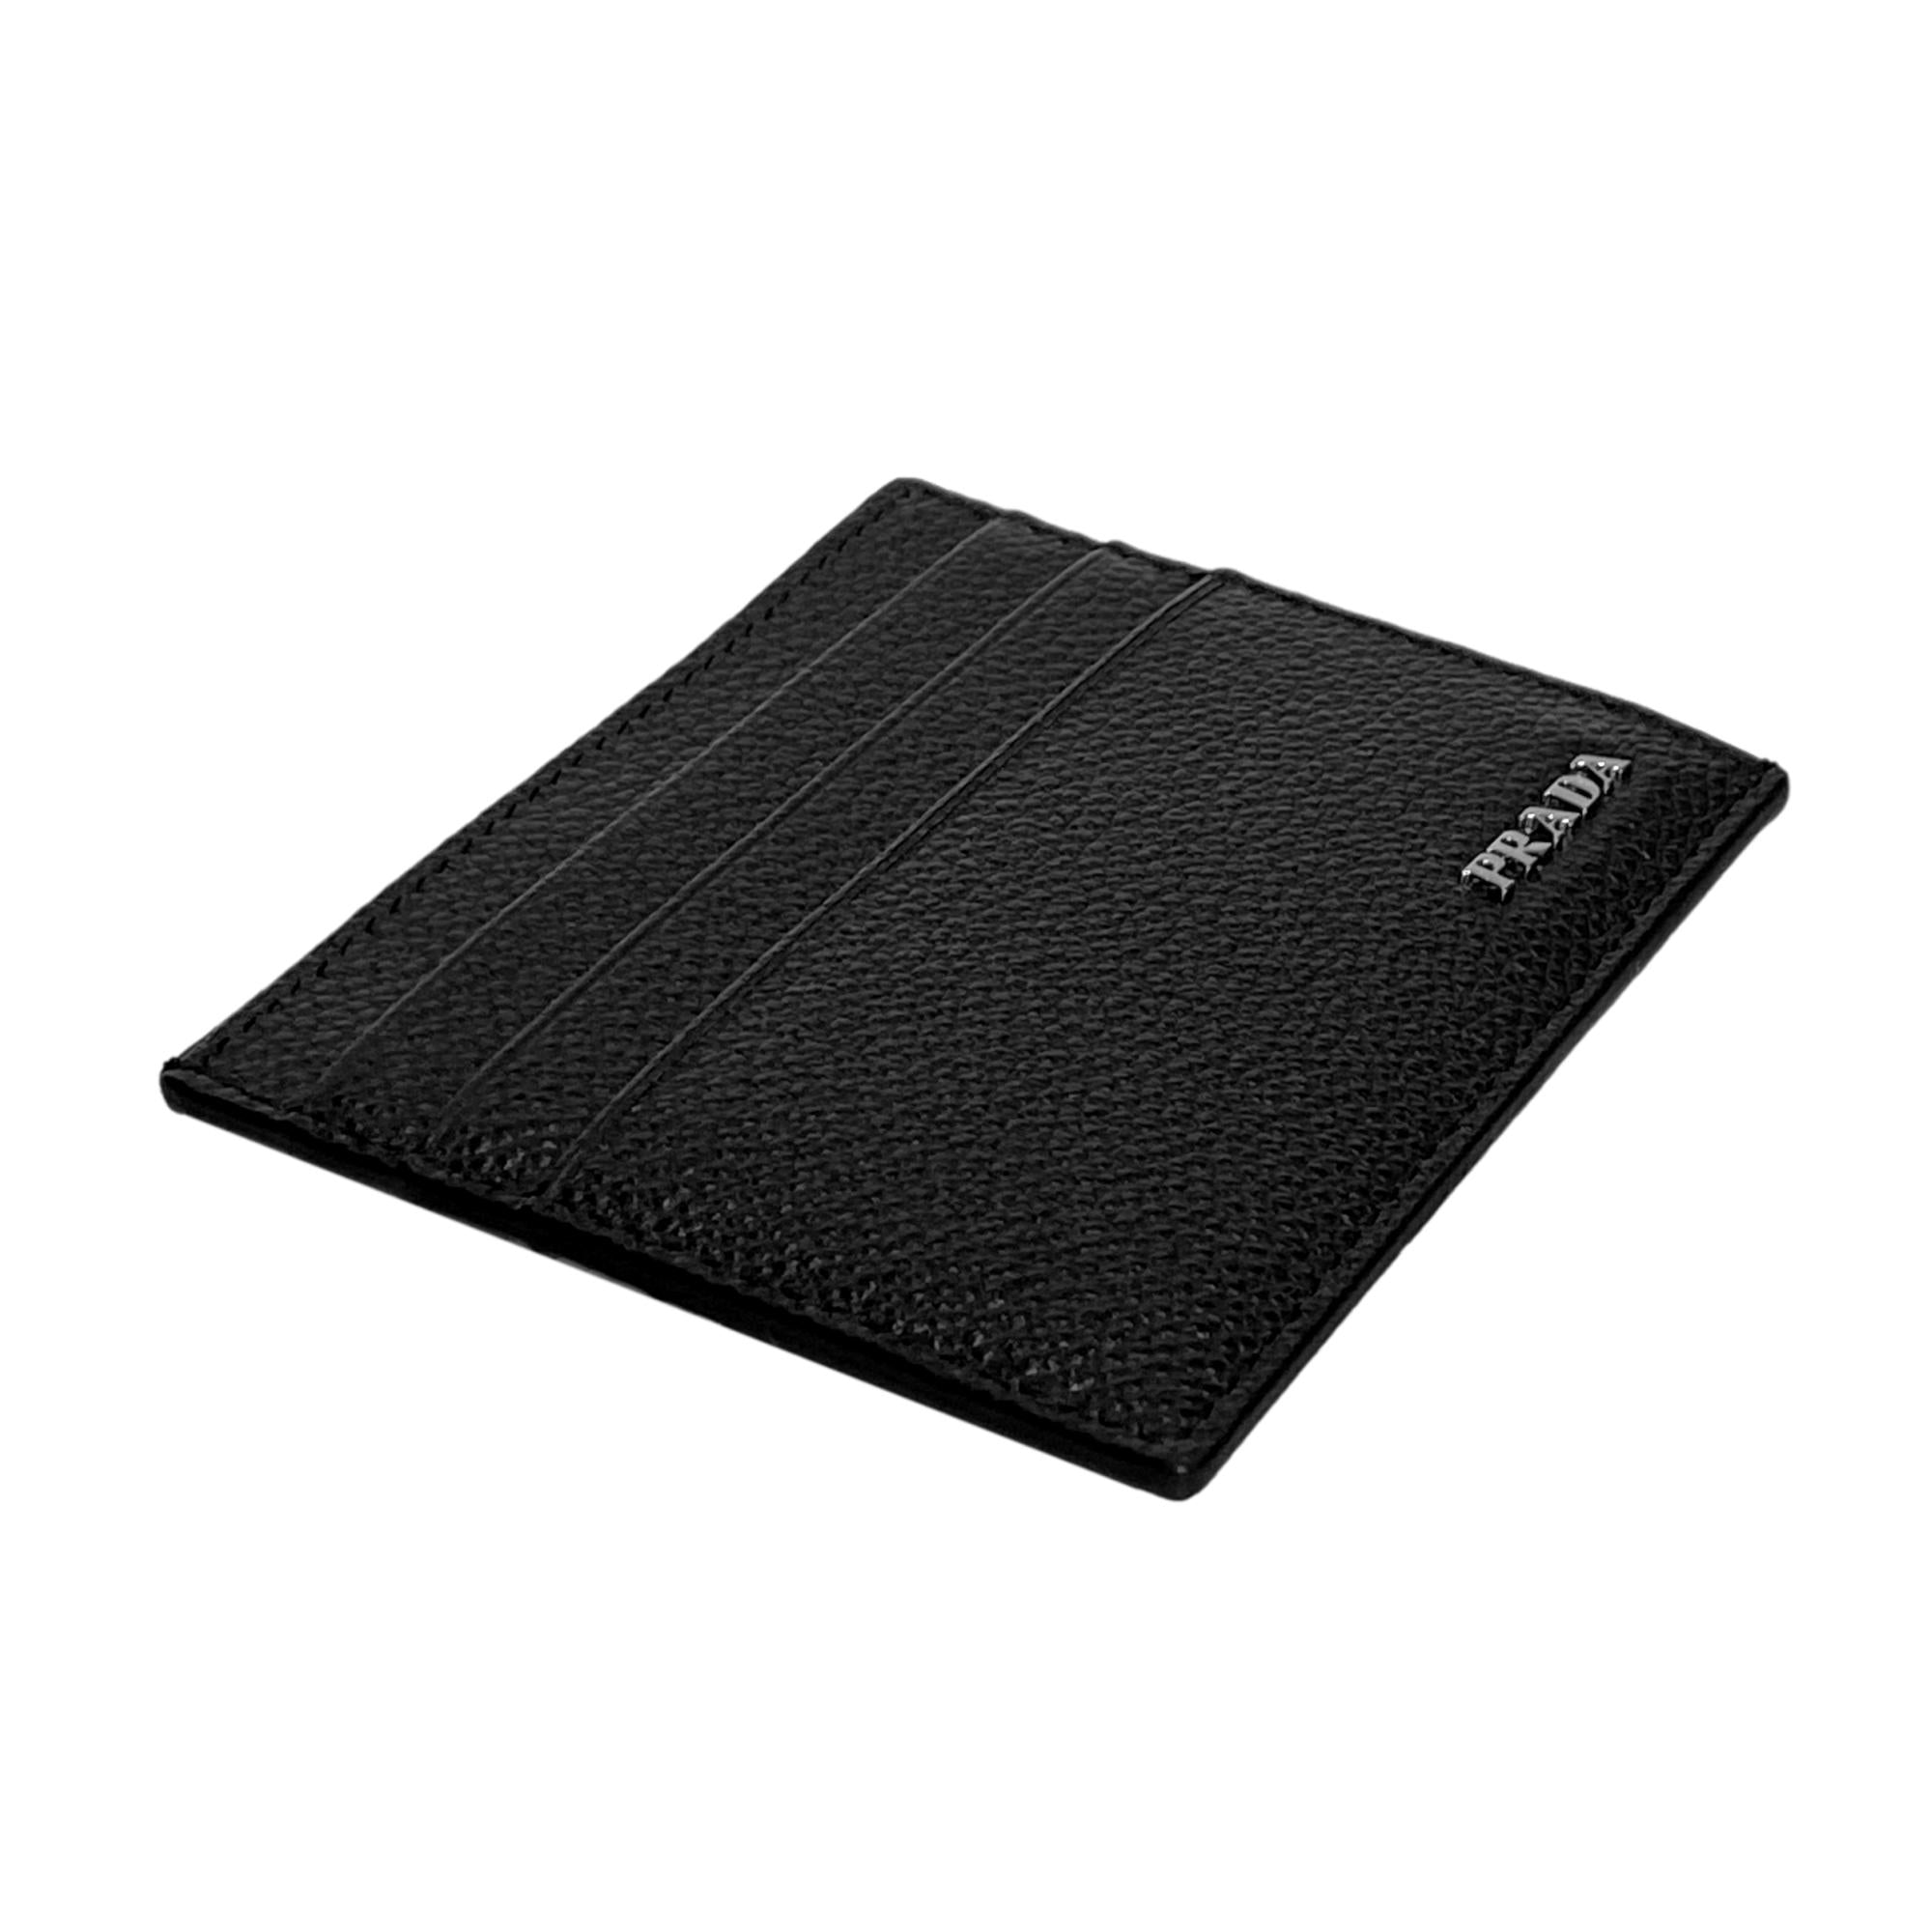 Prada Vitello Micro Grain Leather Black and Gray Card Holder Wallet